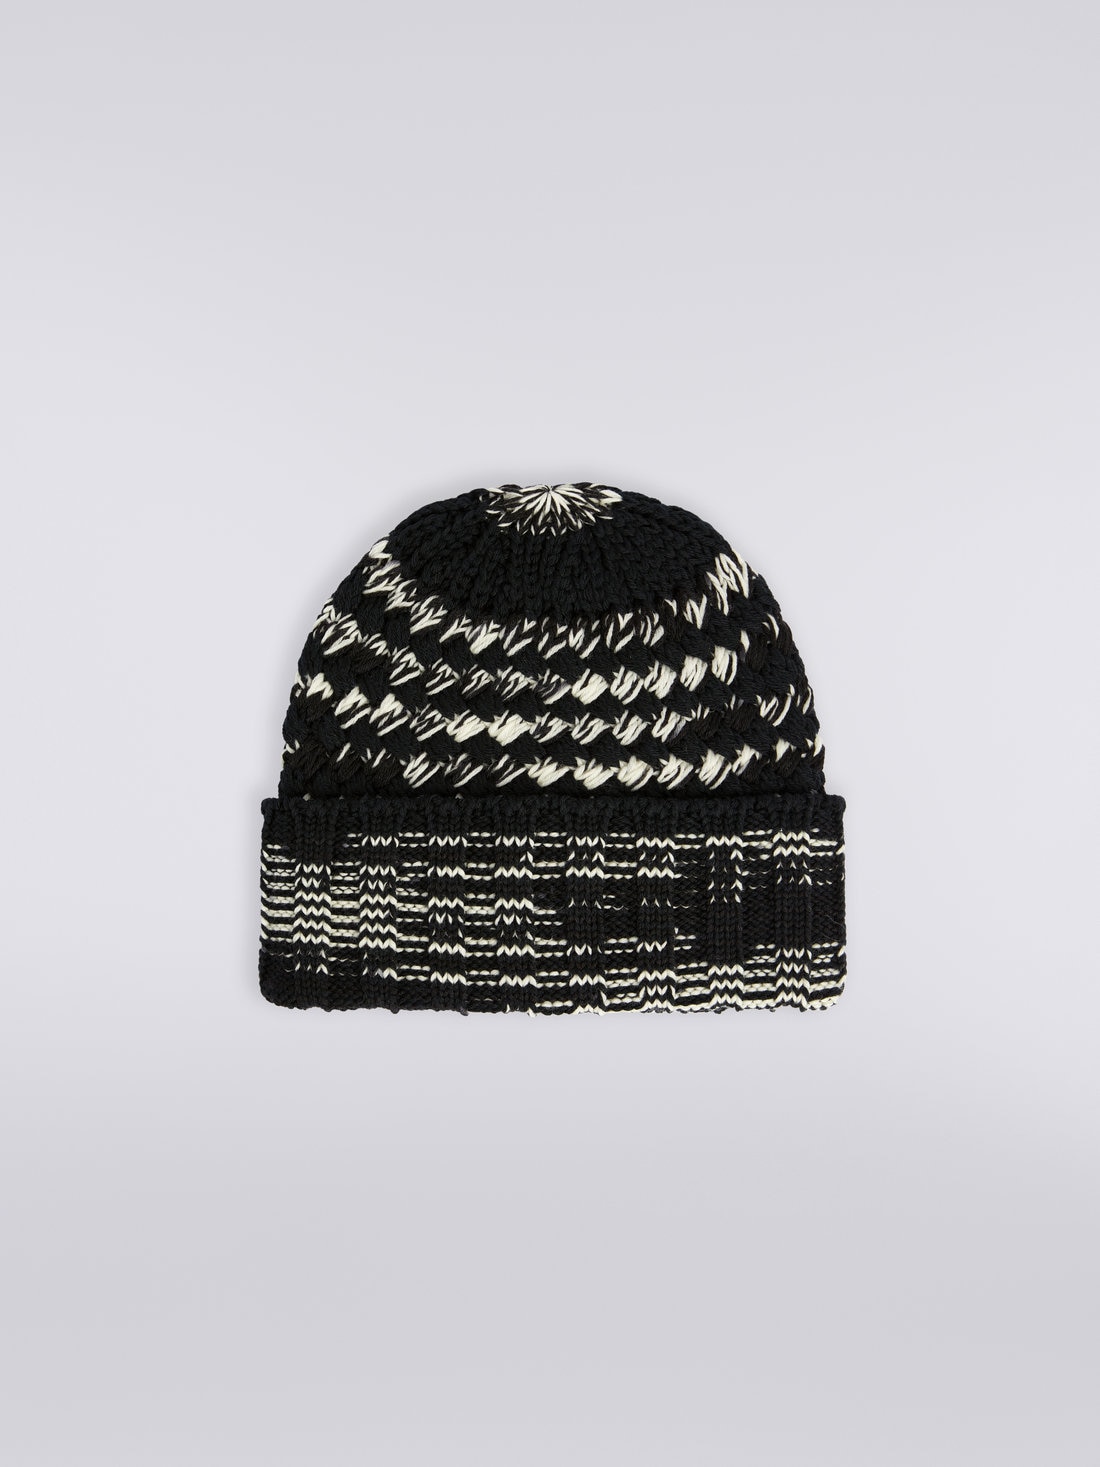 Wool knit hat  , Multicoloured  - 8053147023137 - 0